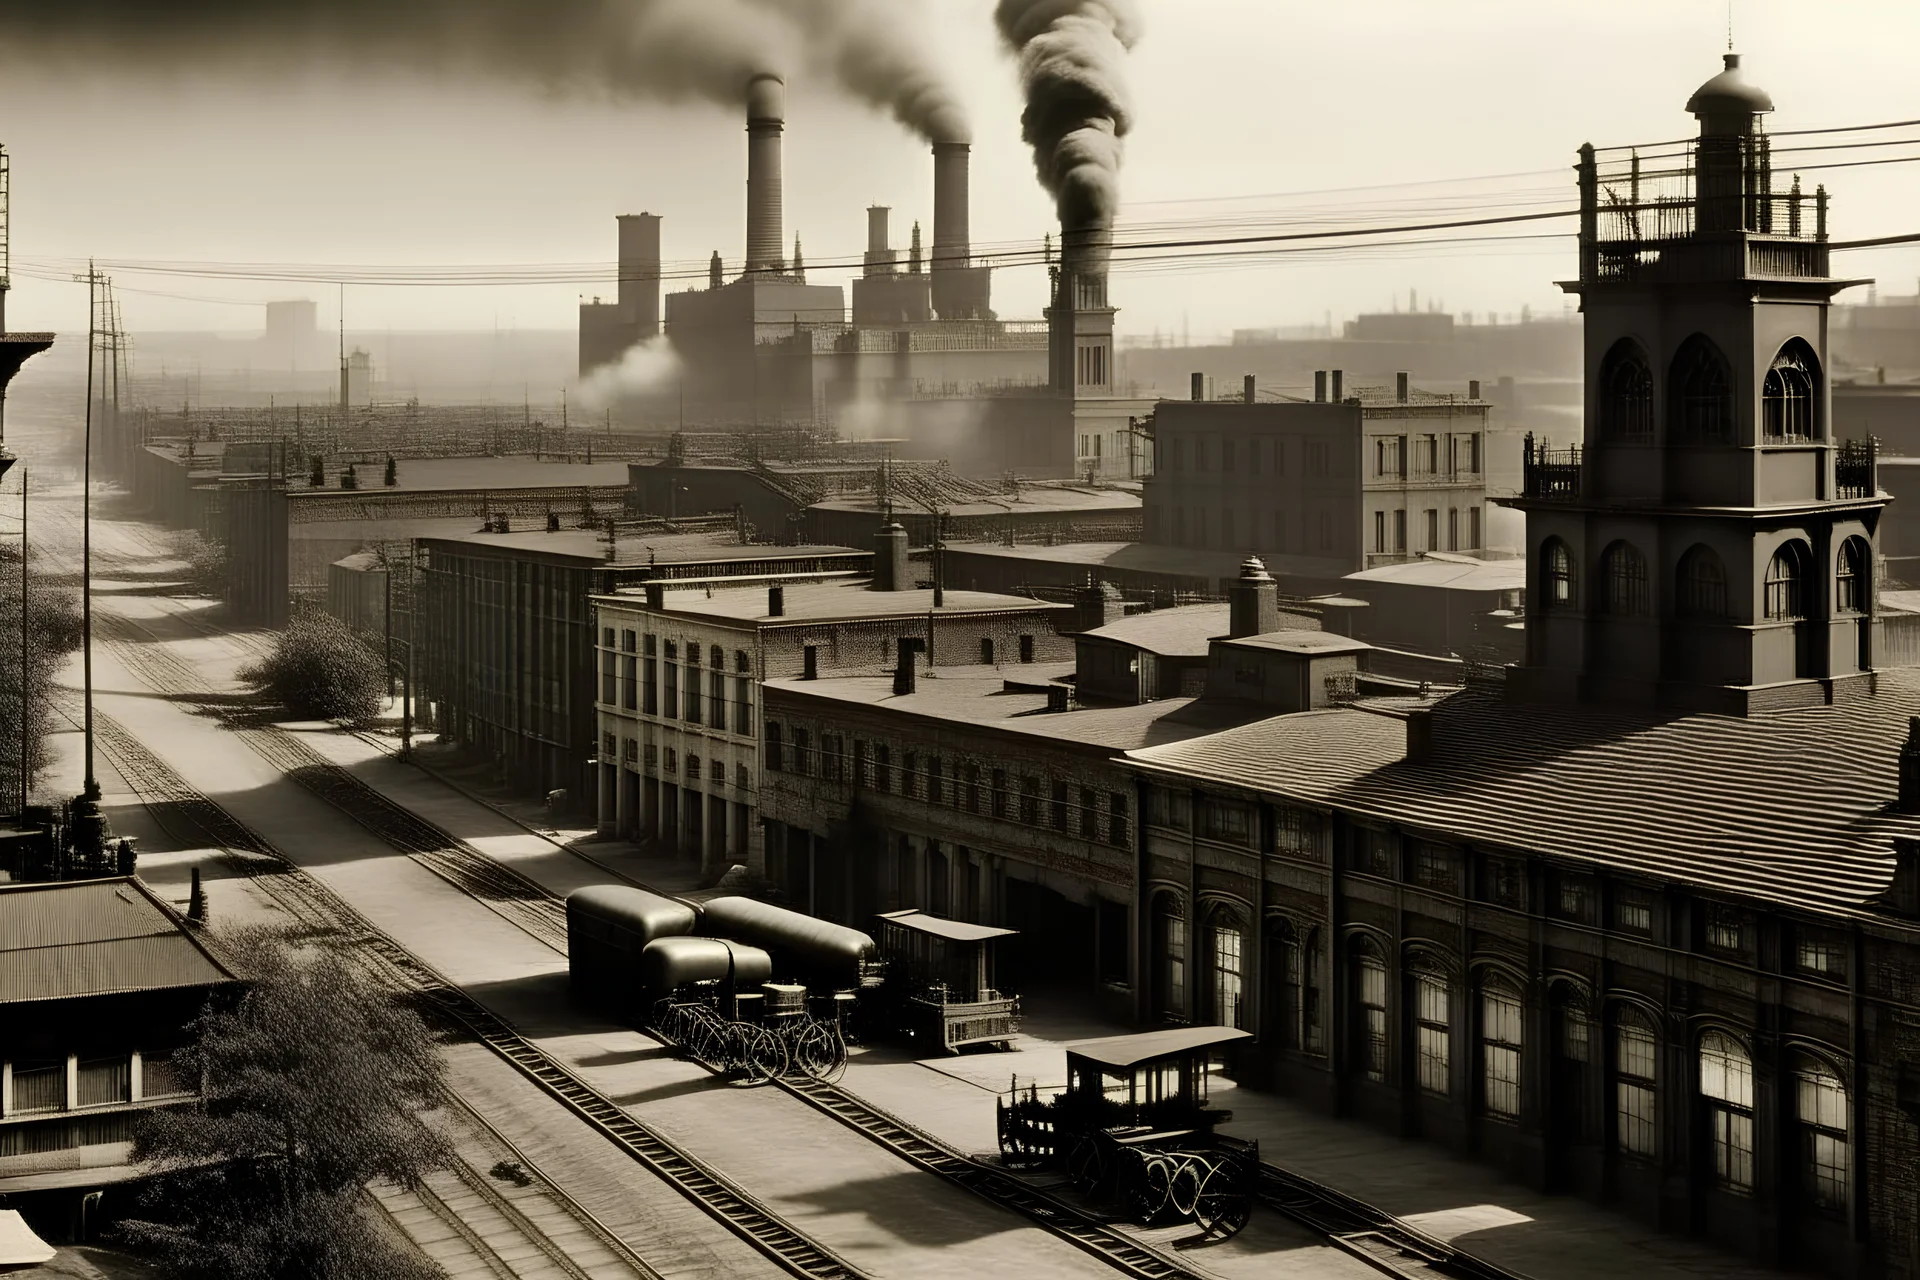 industrialization era city images